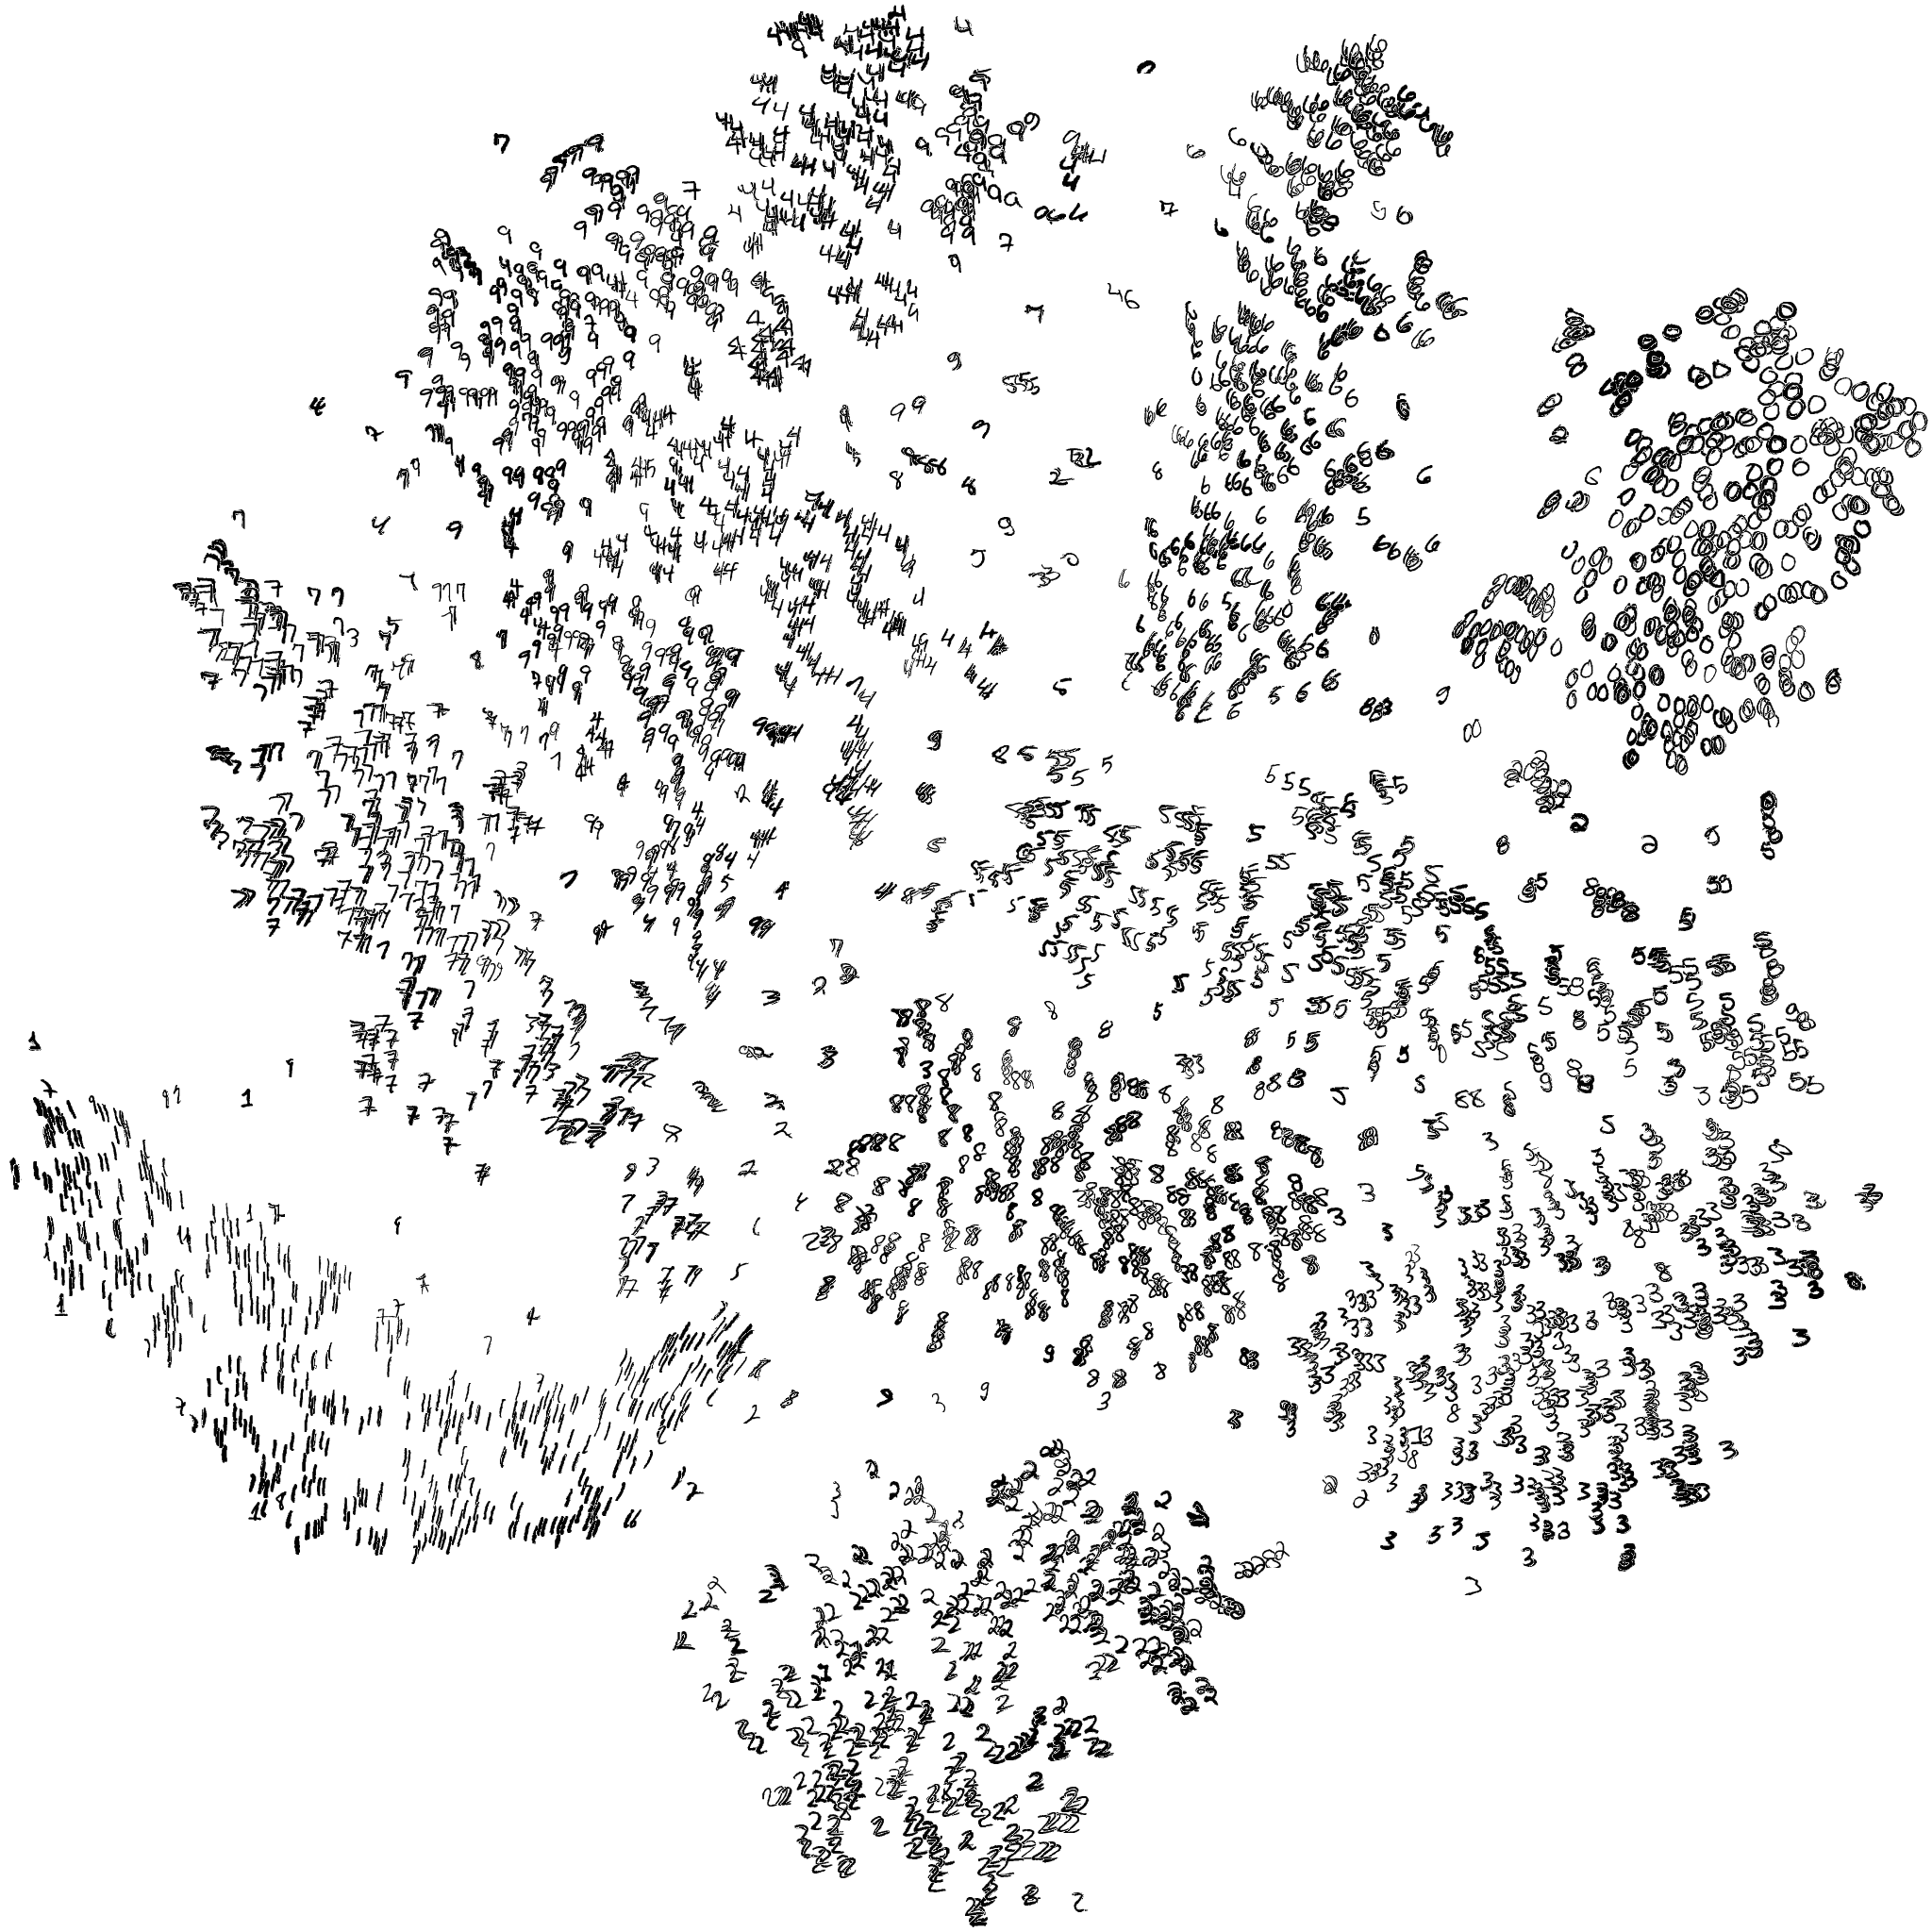 t-SNE map of 5,000 MNIST digits